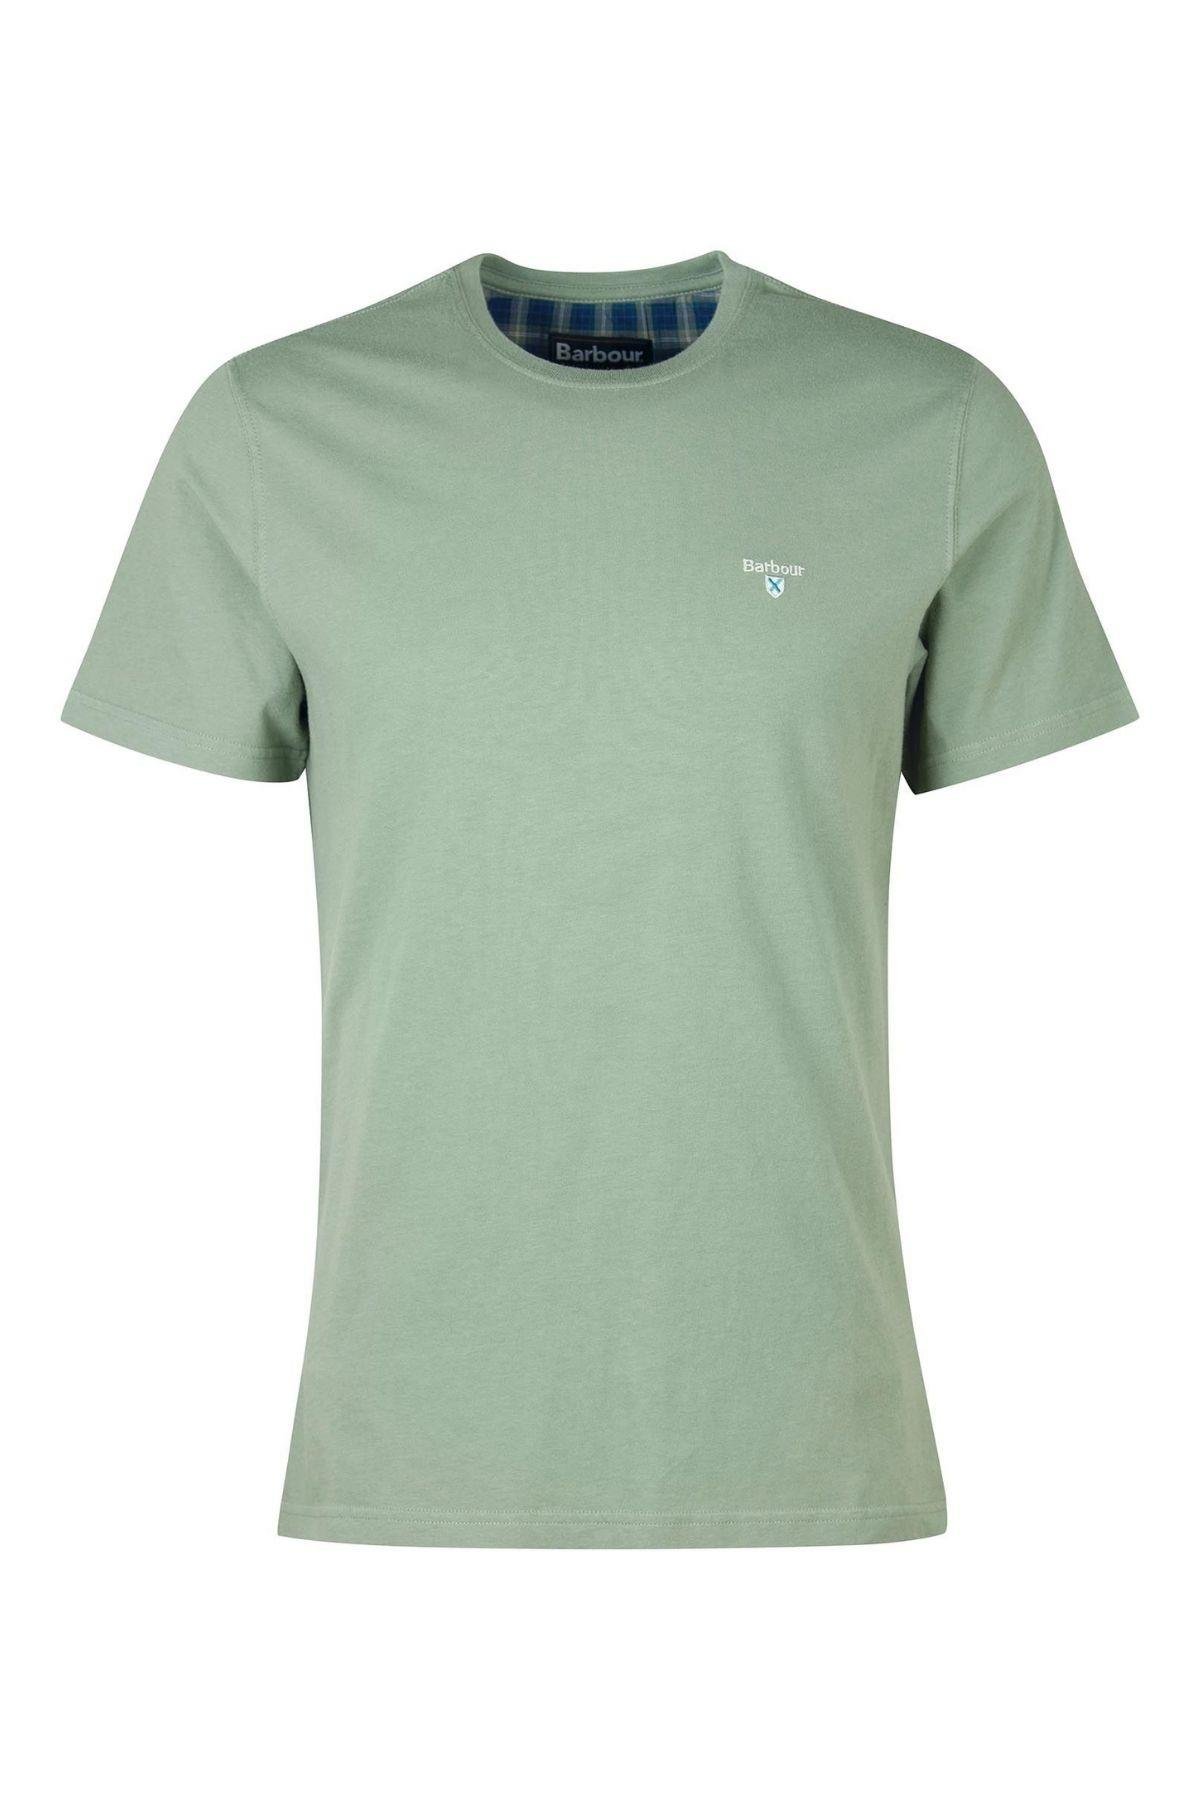 Barbour Tartan Sports T-Shirt GN49 Agave Green